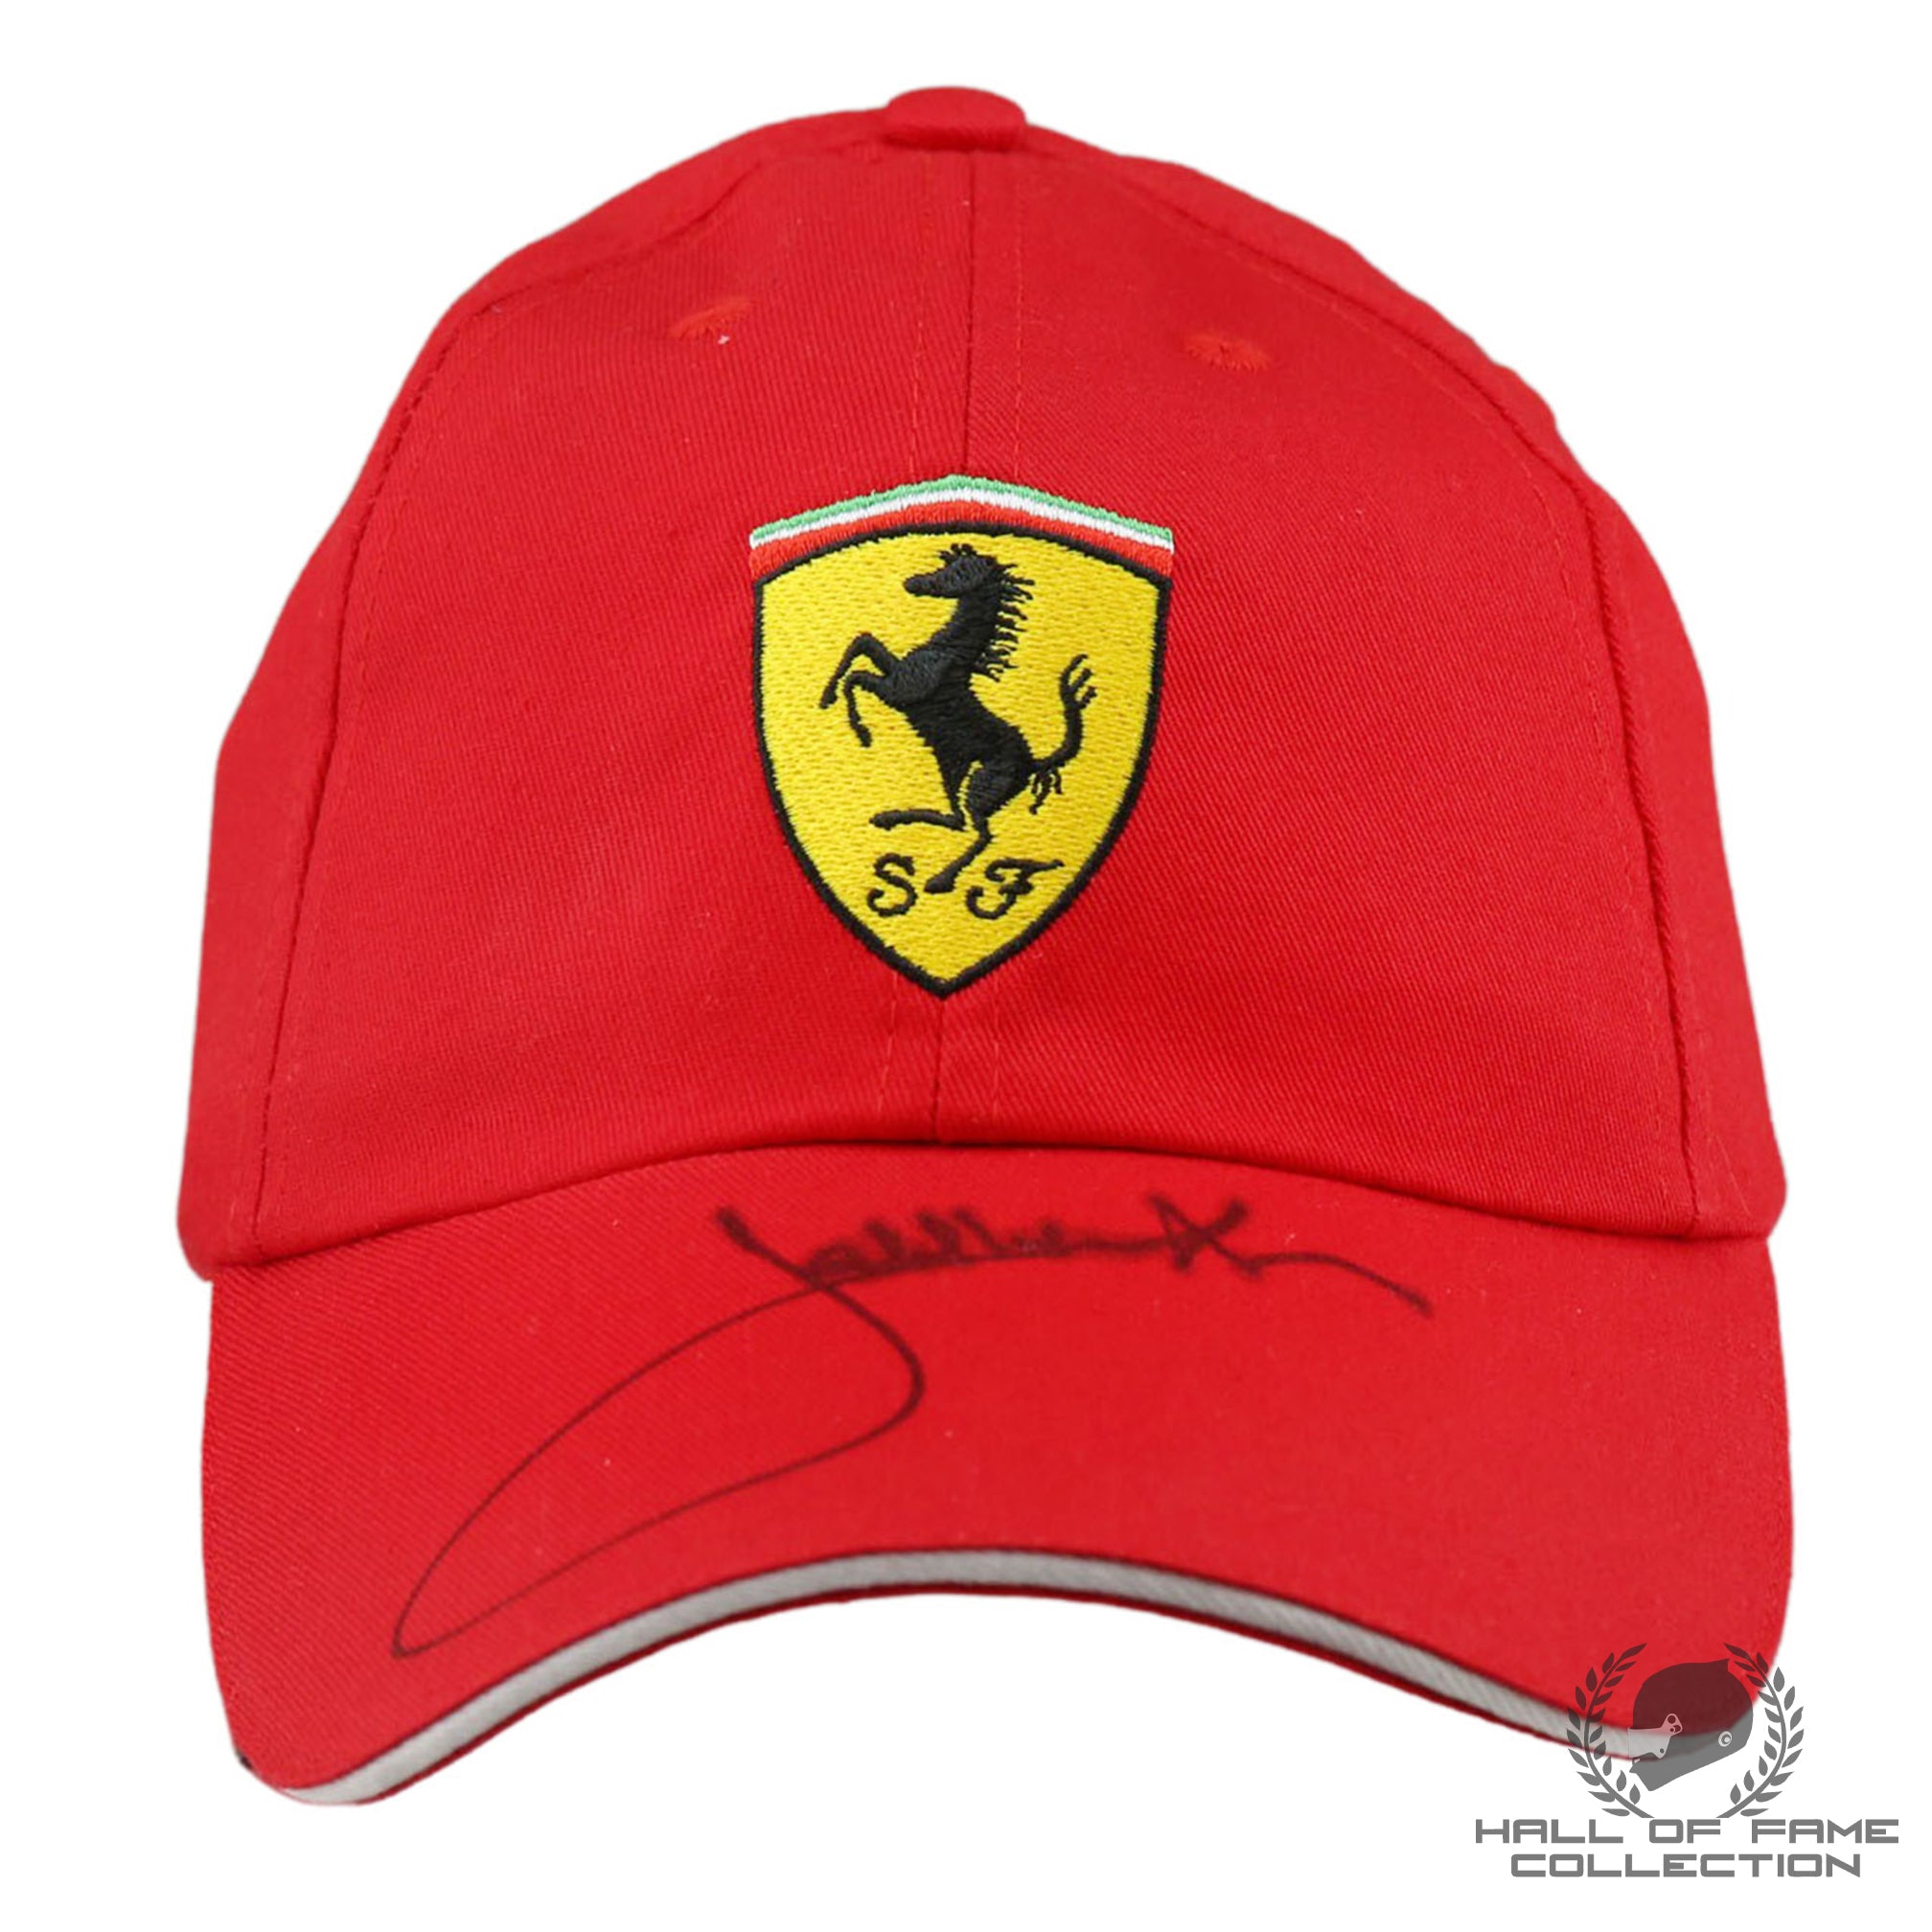 Jacky Ickx Signed Official Scuderia Ferrari F1 Hat